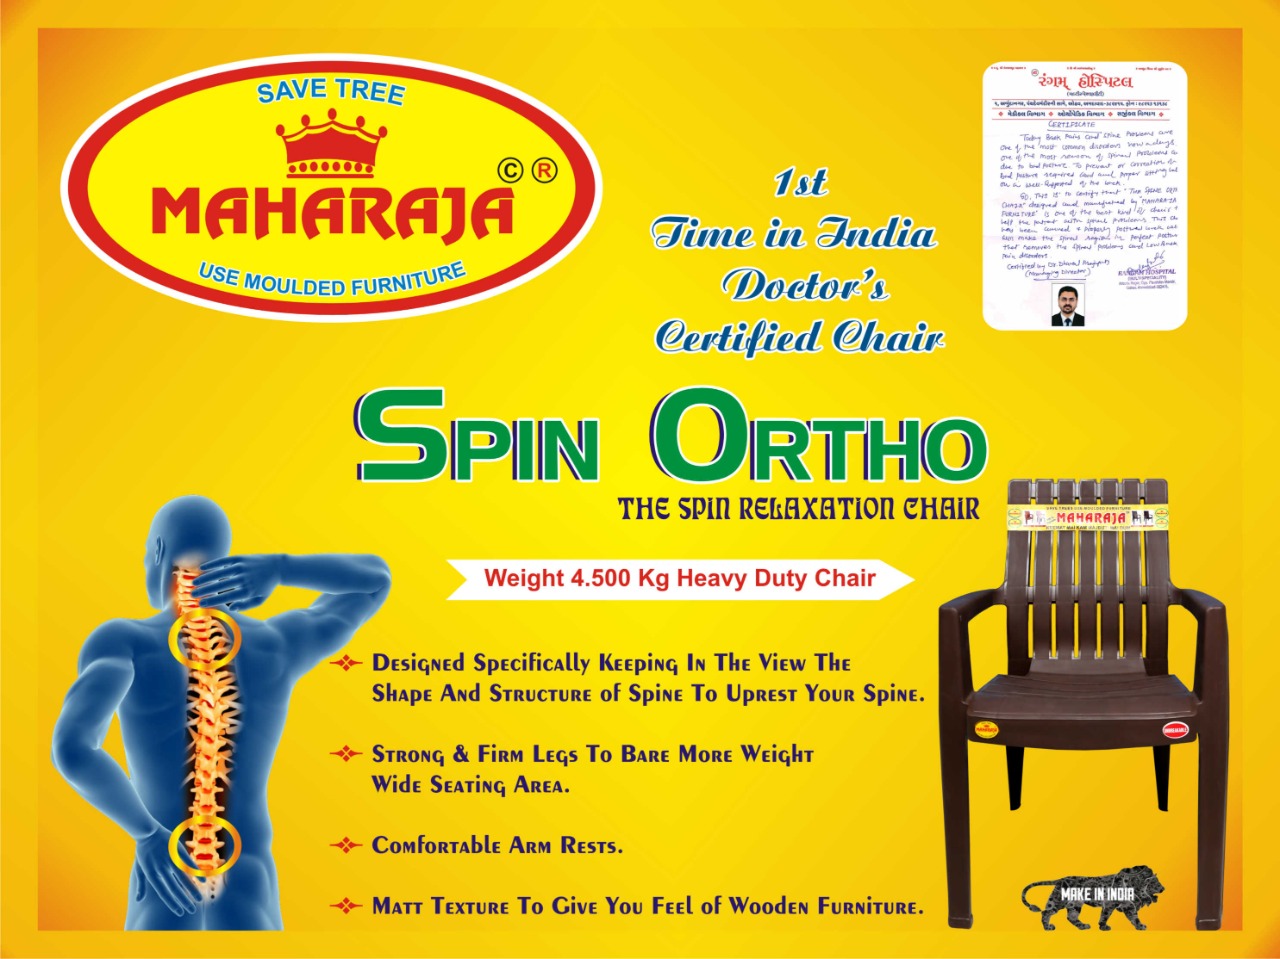 maharaja moulded furniture – plastic chair manufacturer